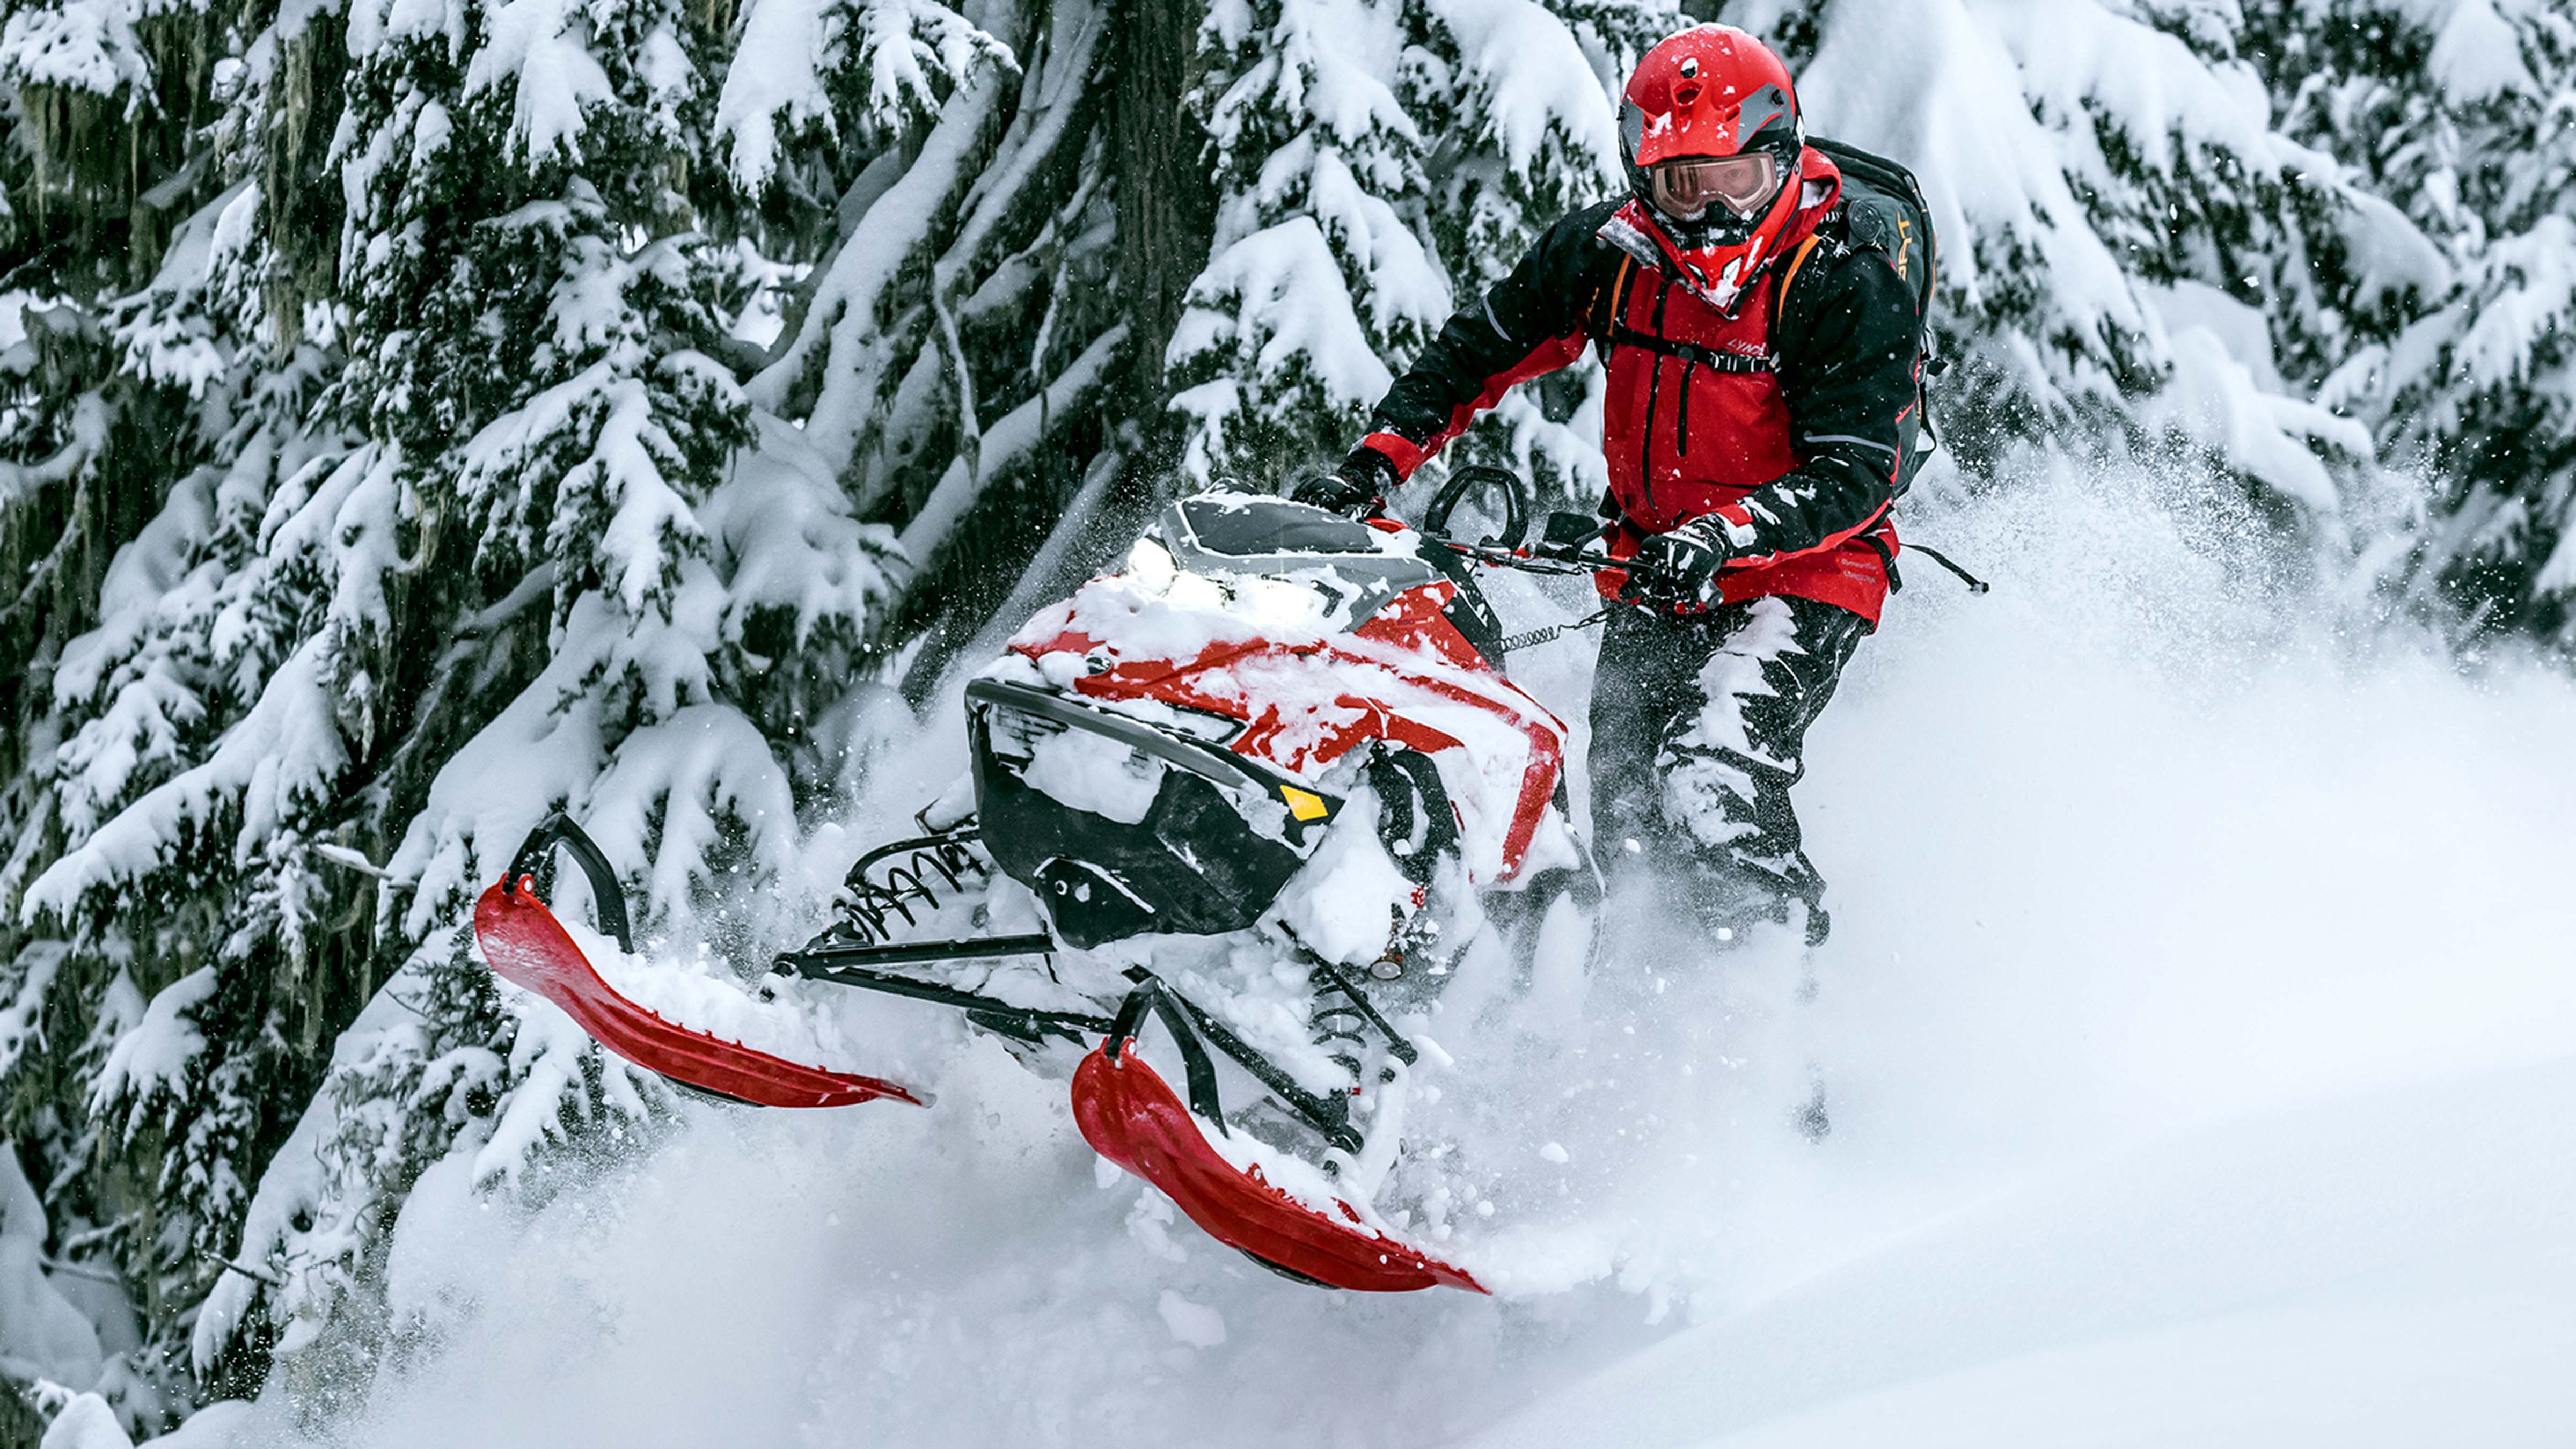 Lynx Shredder snowmobile riding in deep snow